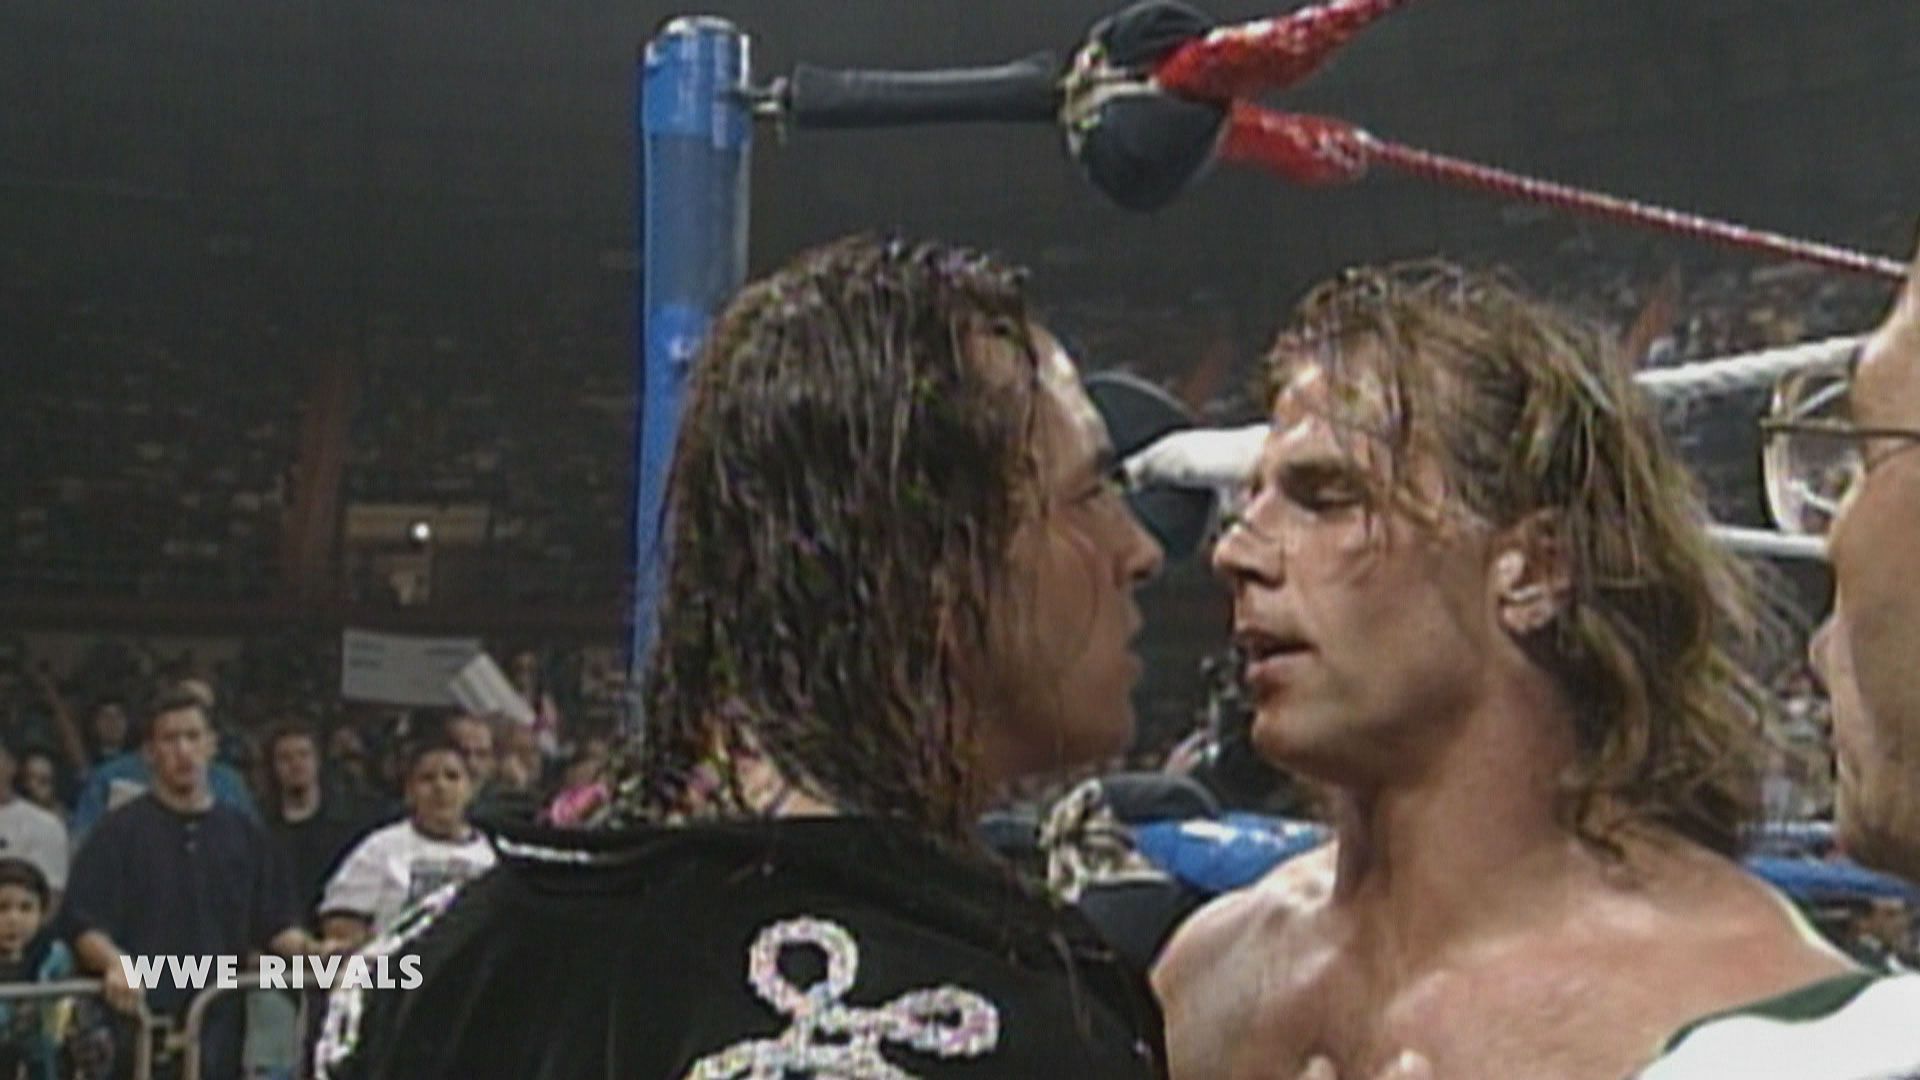 WWE Rivals: Bret "The Hitman" Hart vs. Shawn Michaels